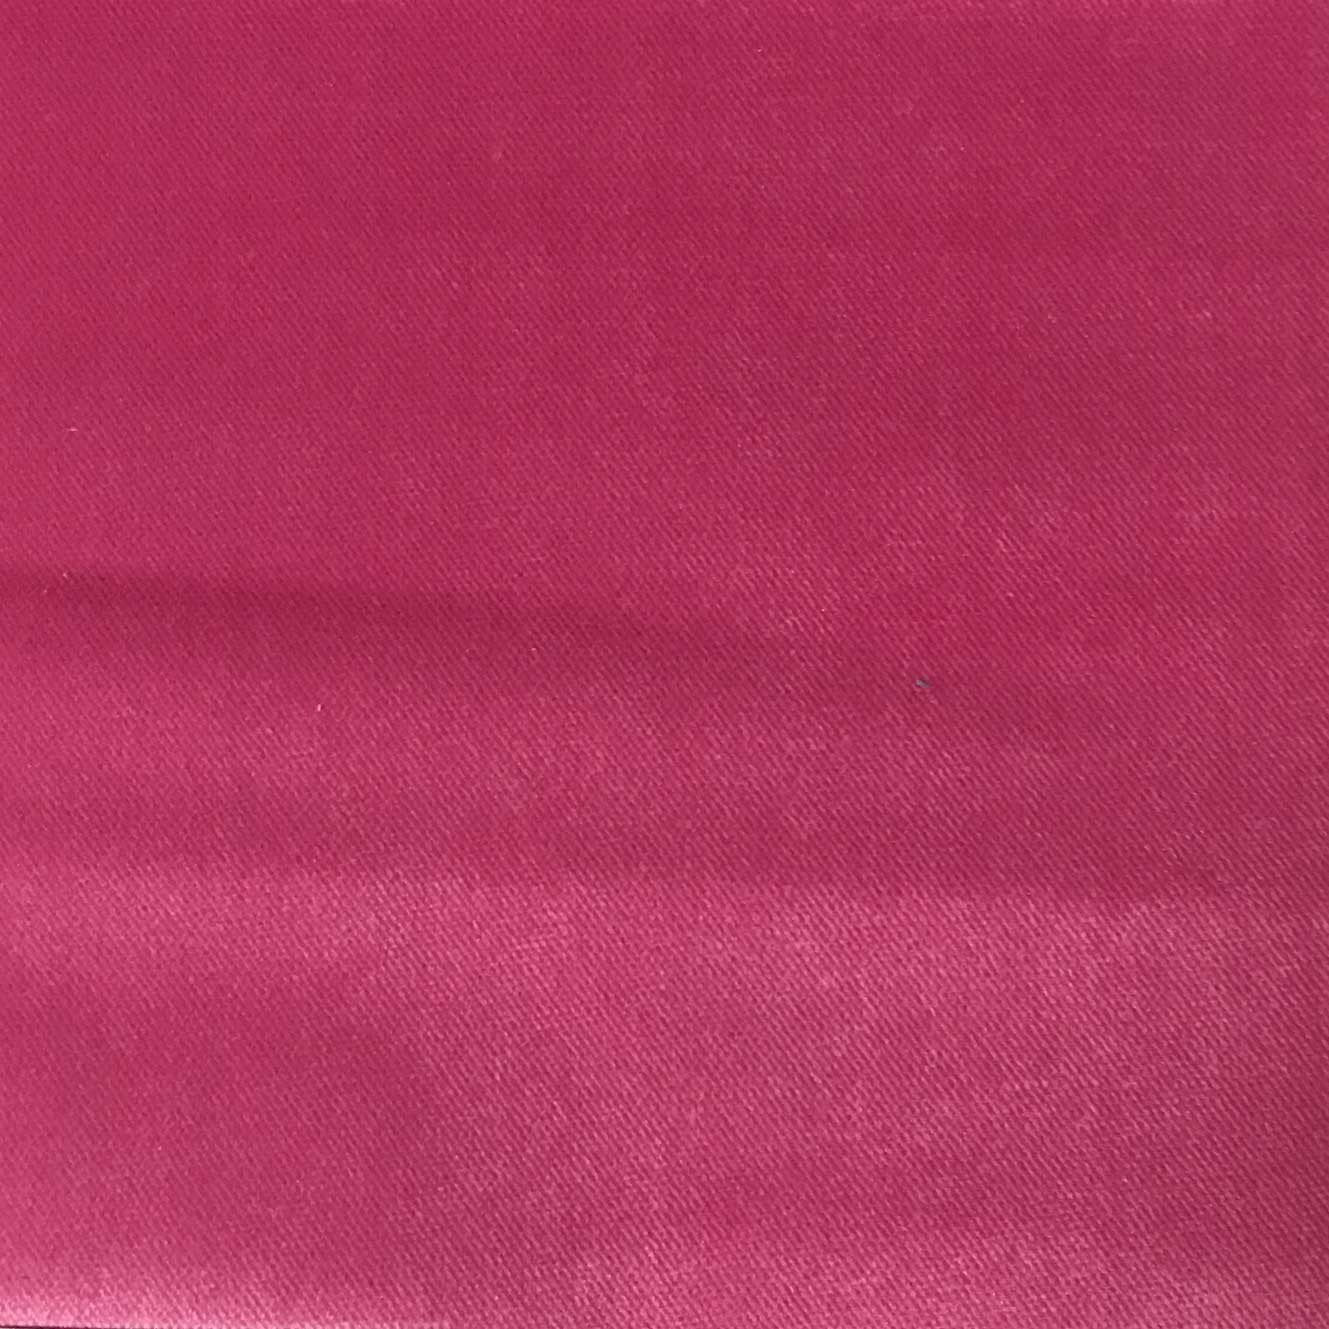 Premium Photo  Red pink denim textile background fabric